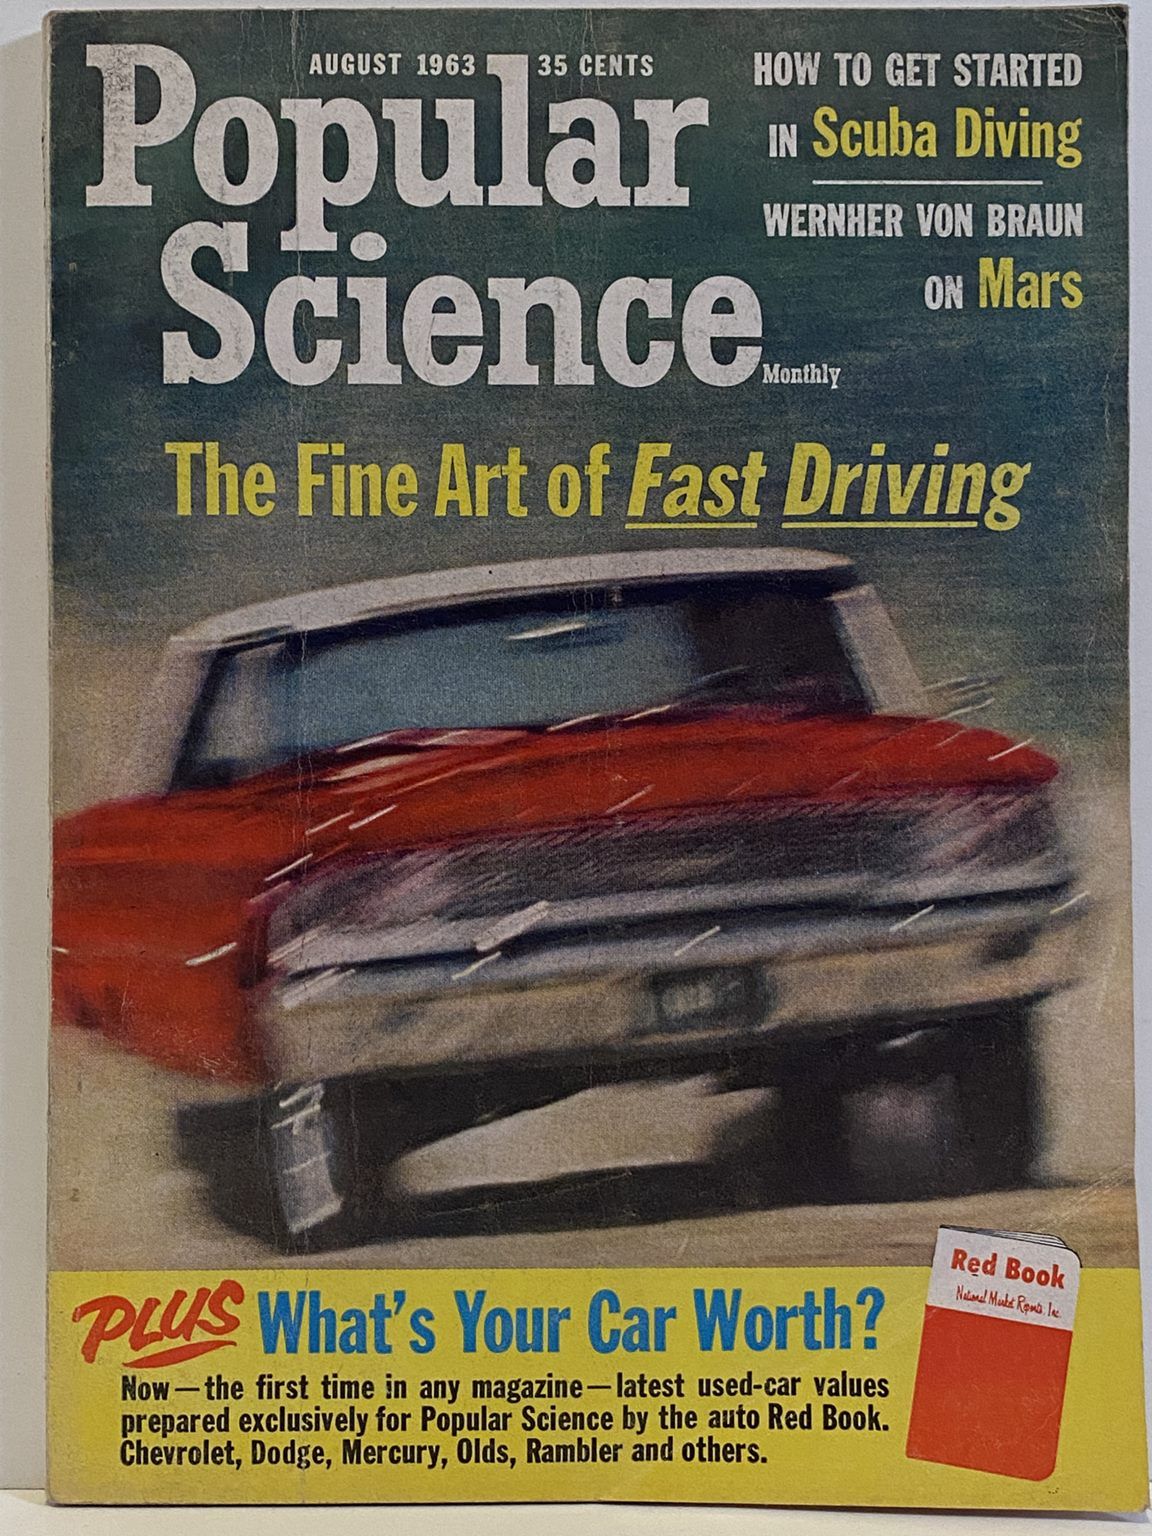 VINTAGE MAGAZINE: Popular Science, Vol. 183, No. 2 - August 1963